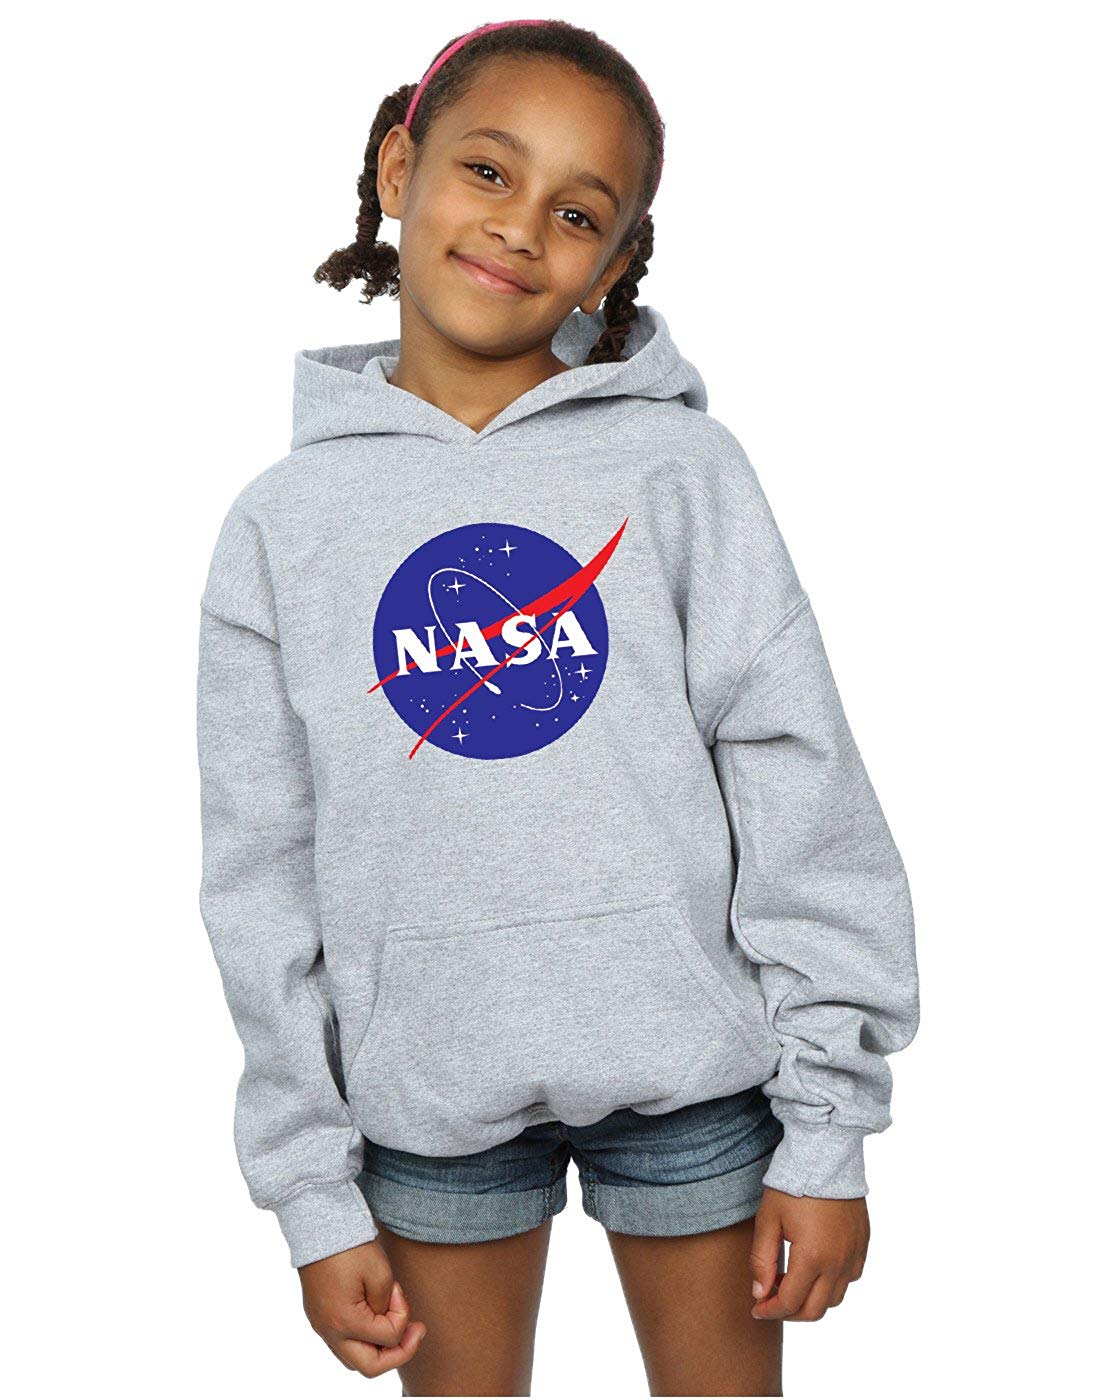 NASA Girl Logo - Amazon.com: NASA Girls Classic Insignia Logo Hoodie: Clothing